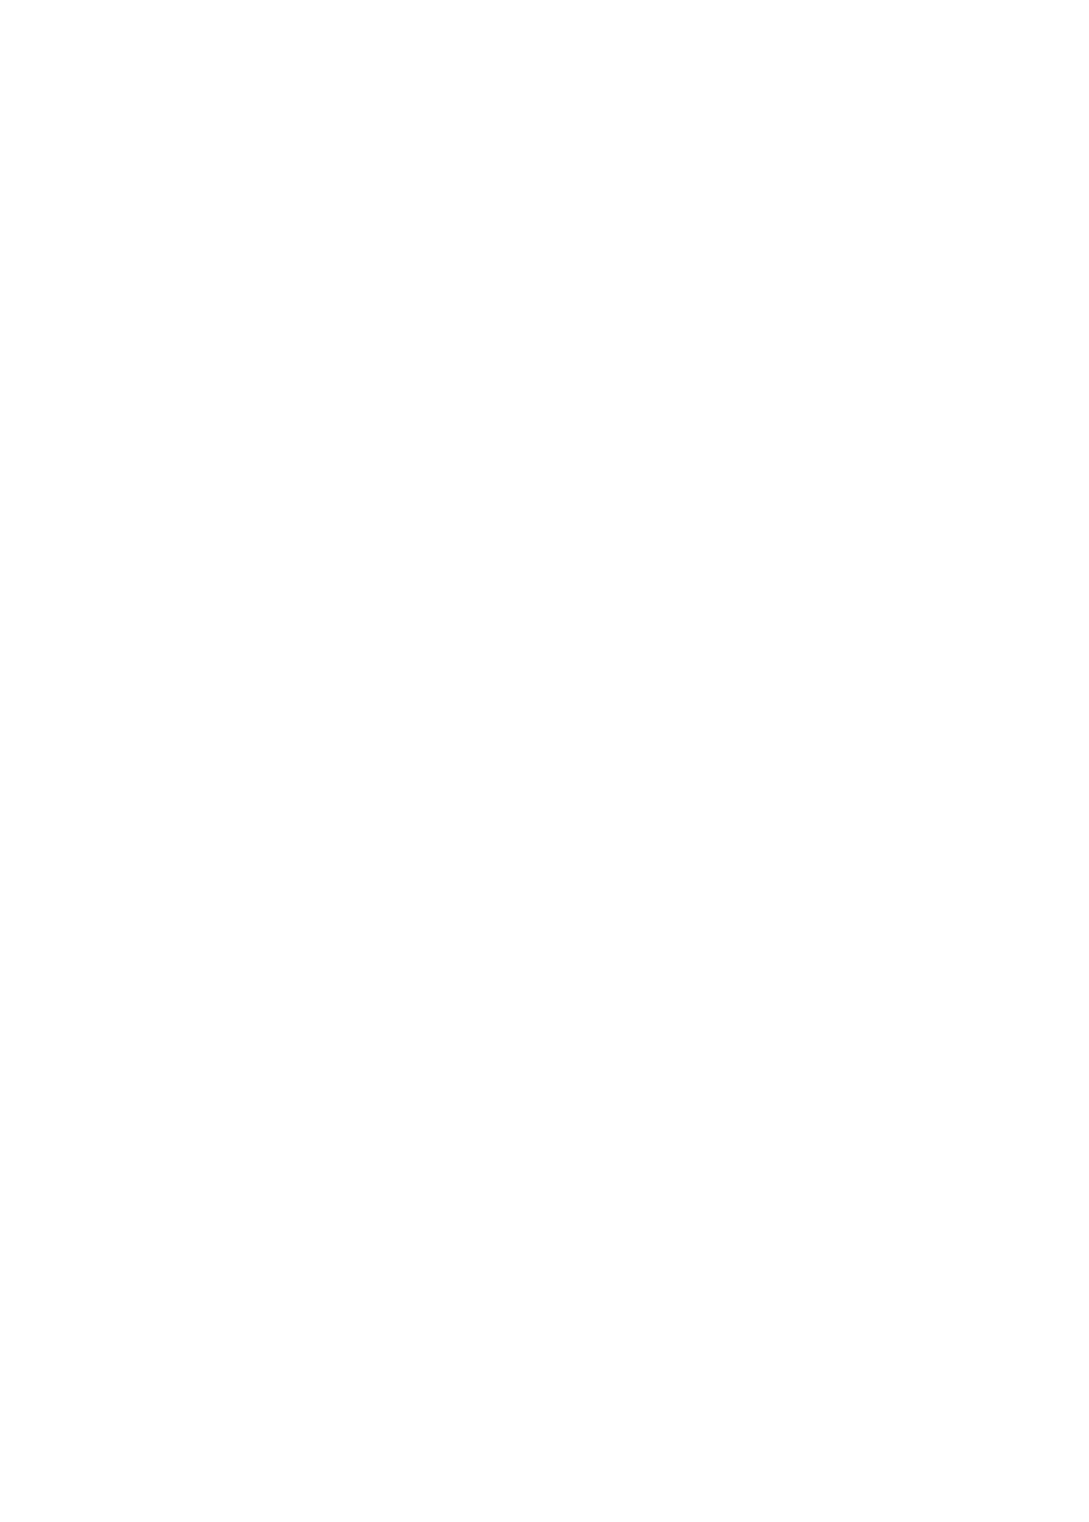 Pandora logo for dark backgrounds (transparent PNG)